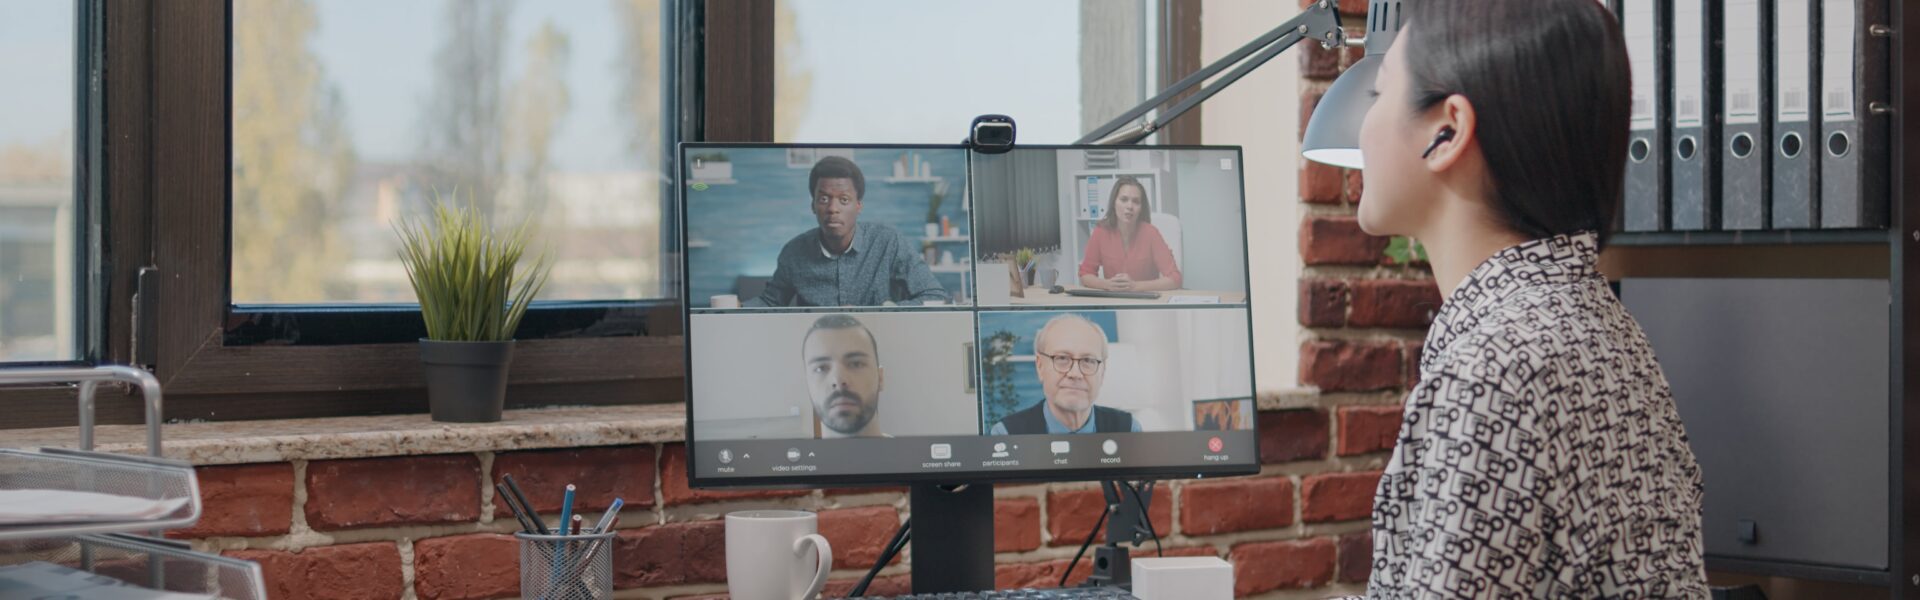 6 best webcams for thin bezel monitors